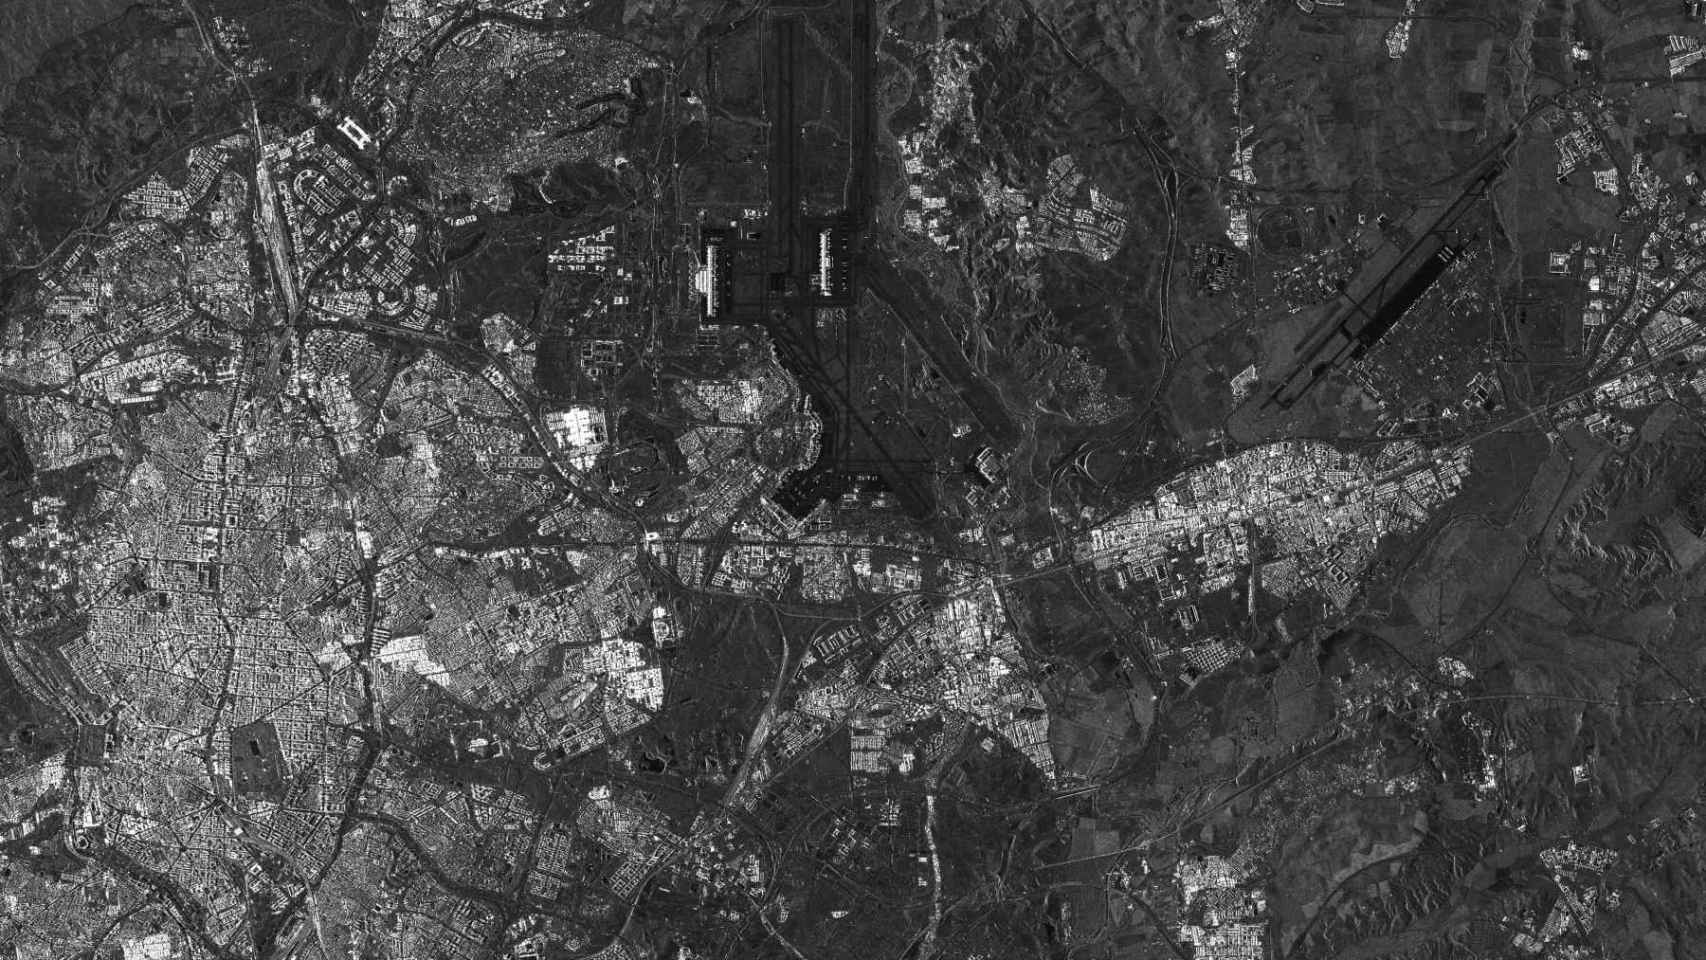 Imagen de Torrejón de Ardoz (Madrid) tomada por un satélite de Hisdesat.